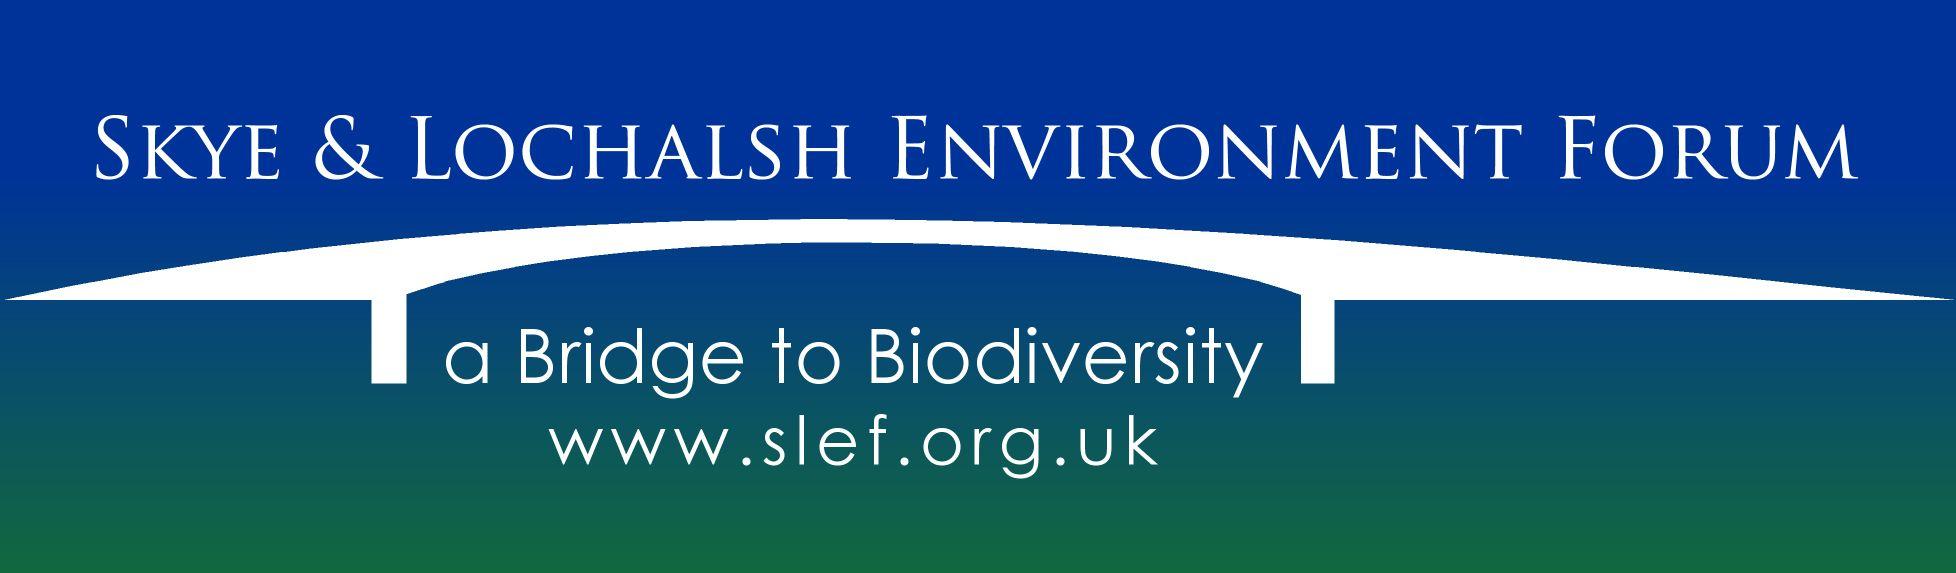 Blue Green and Black Logo - Skye and Lochalsh Environment Forum - SLEF Logos